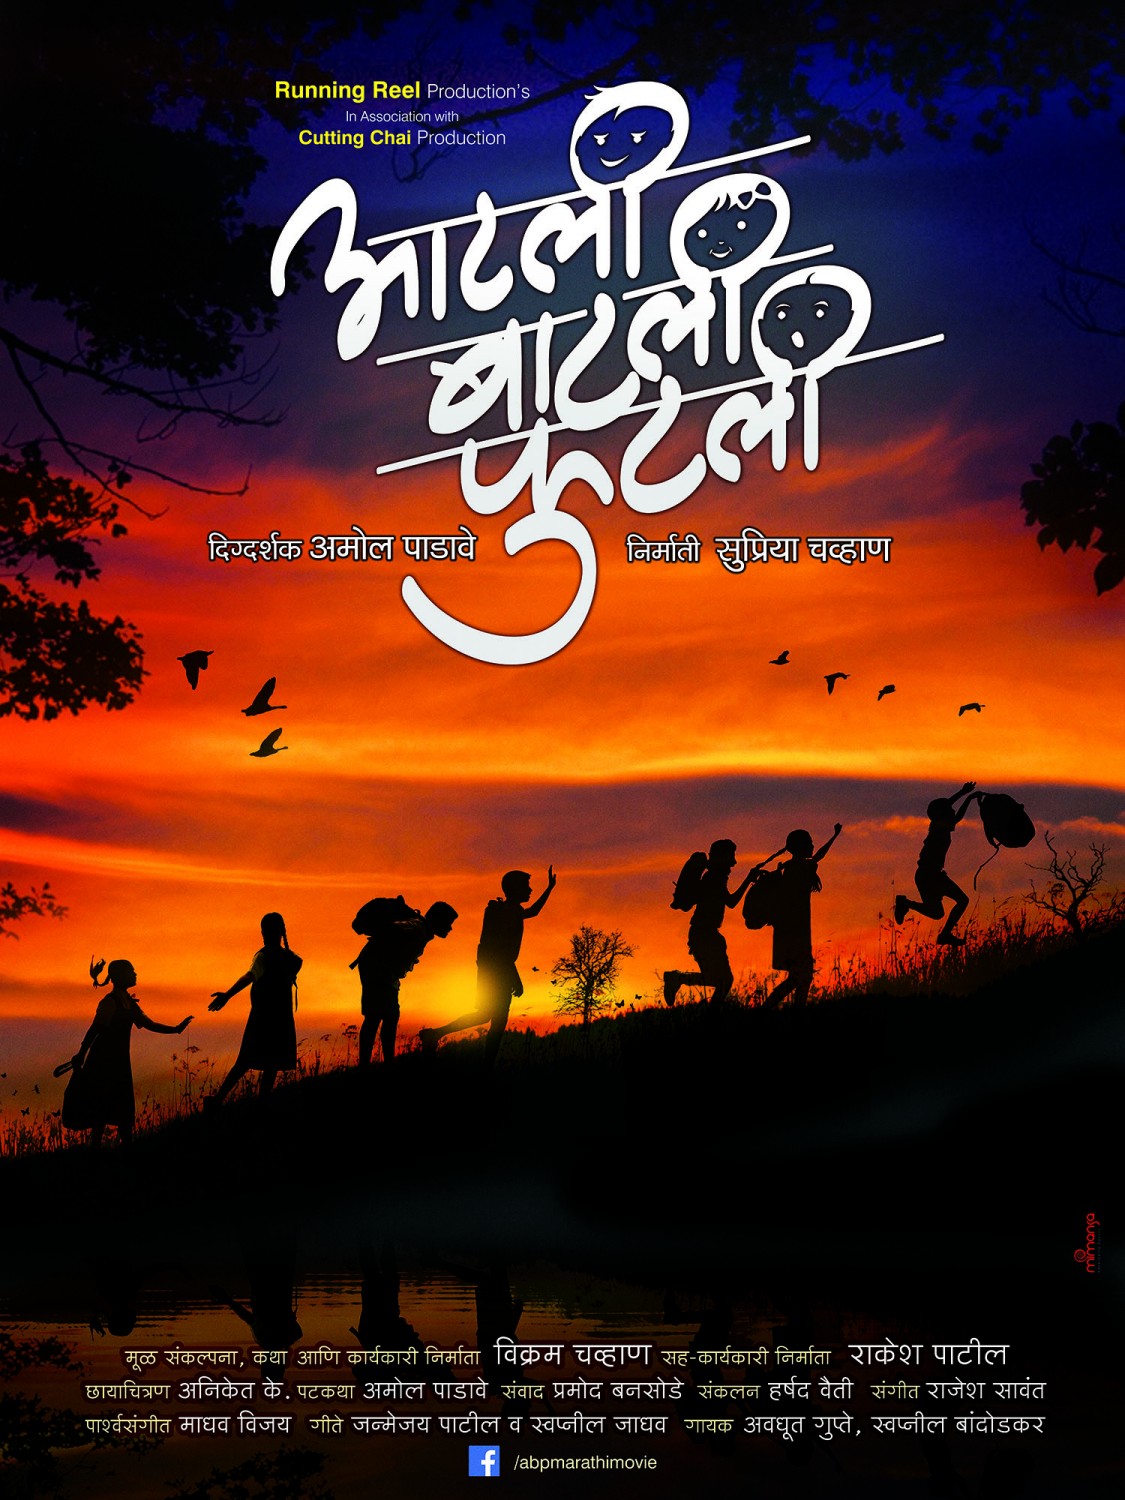 Extra Large Movie Poster Image for Atali Batali Phutali (#1 of 3)